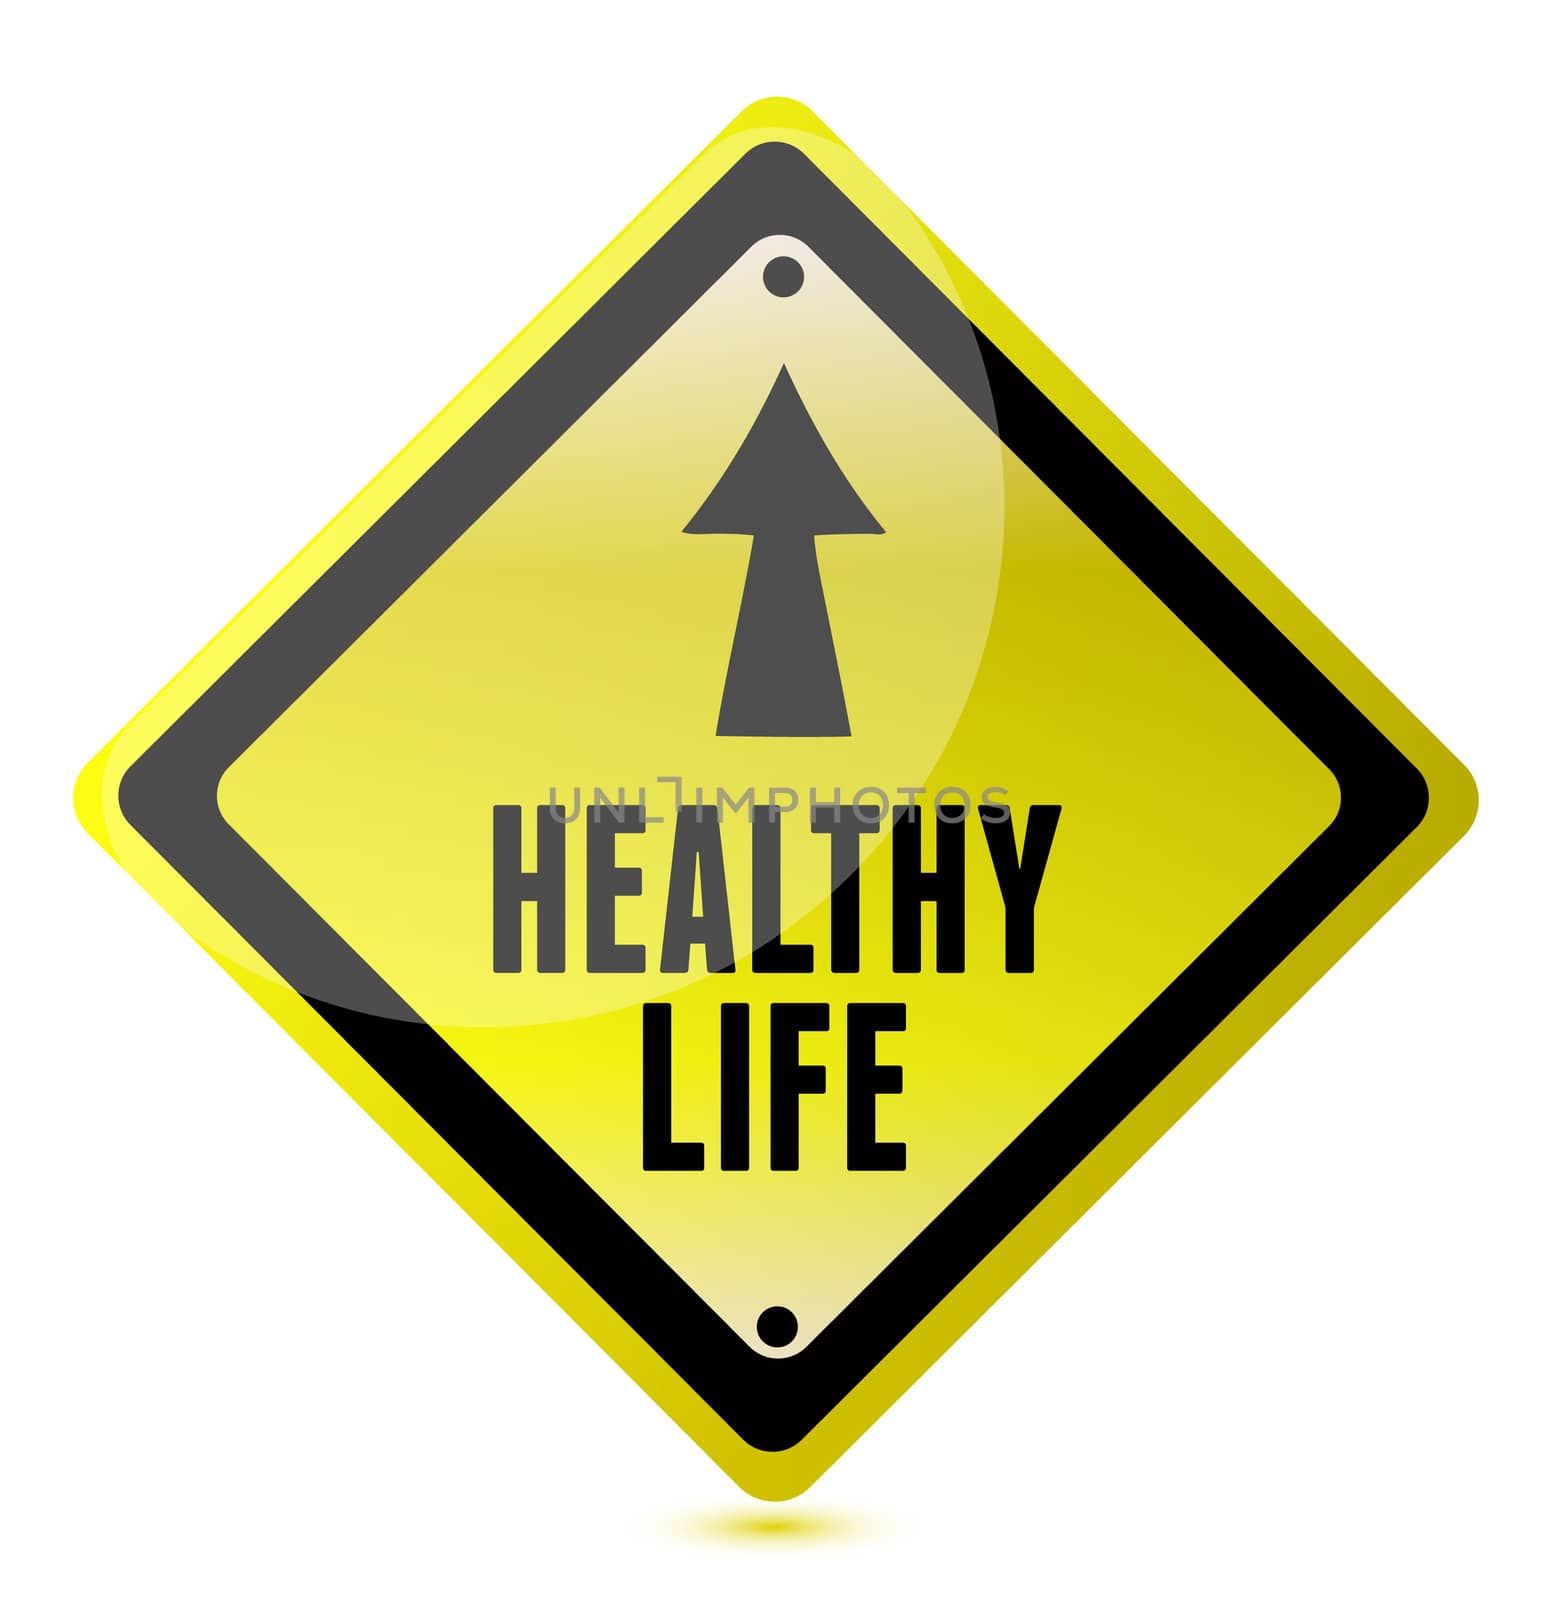 Healthy Life Road Sign illustration design by alexmillos